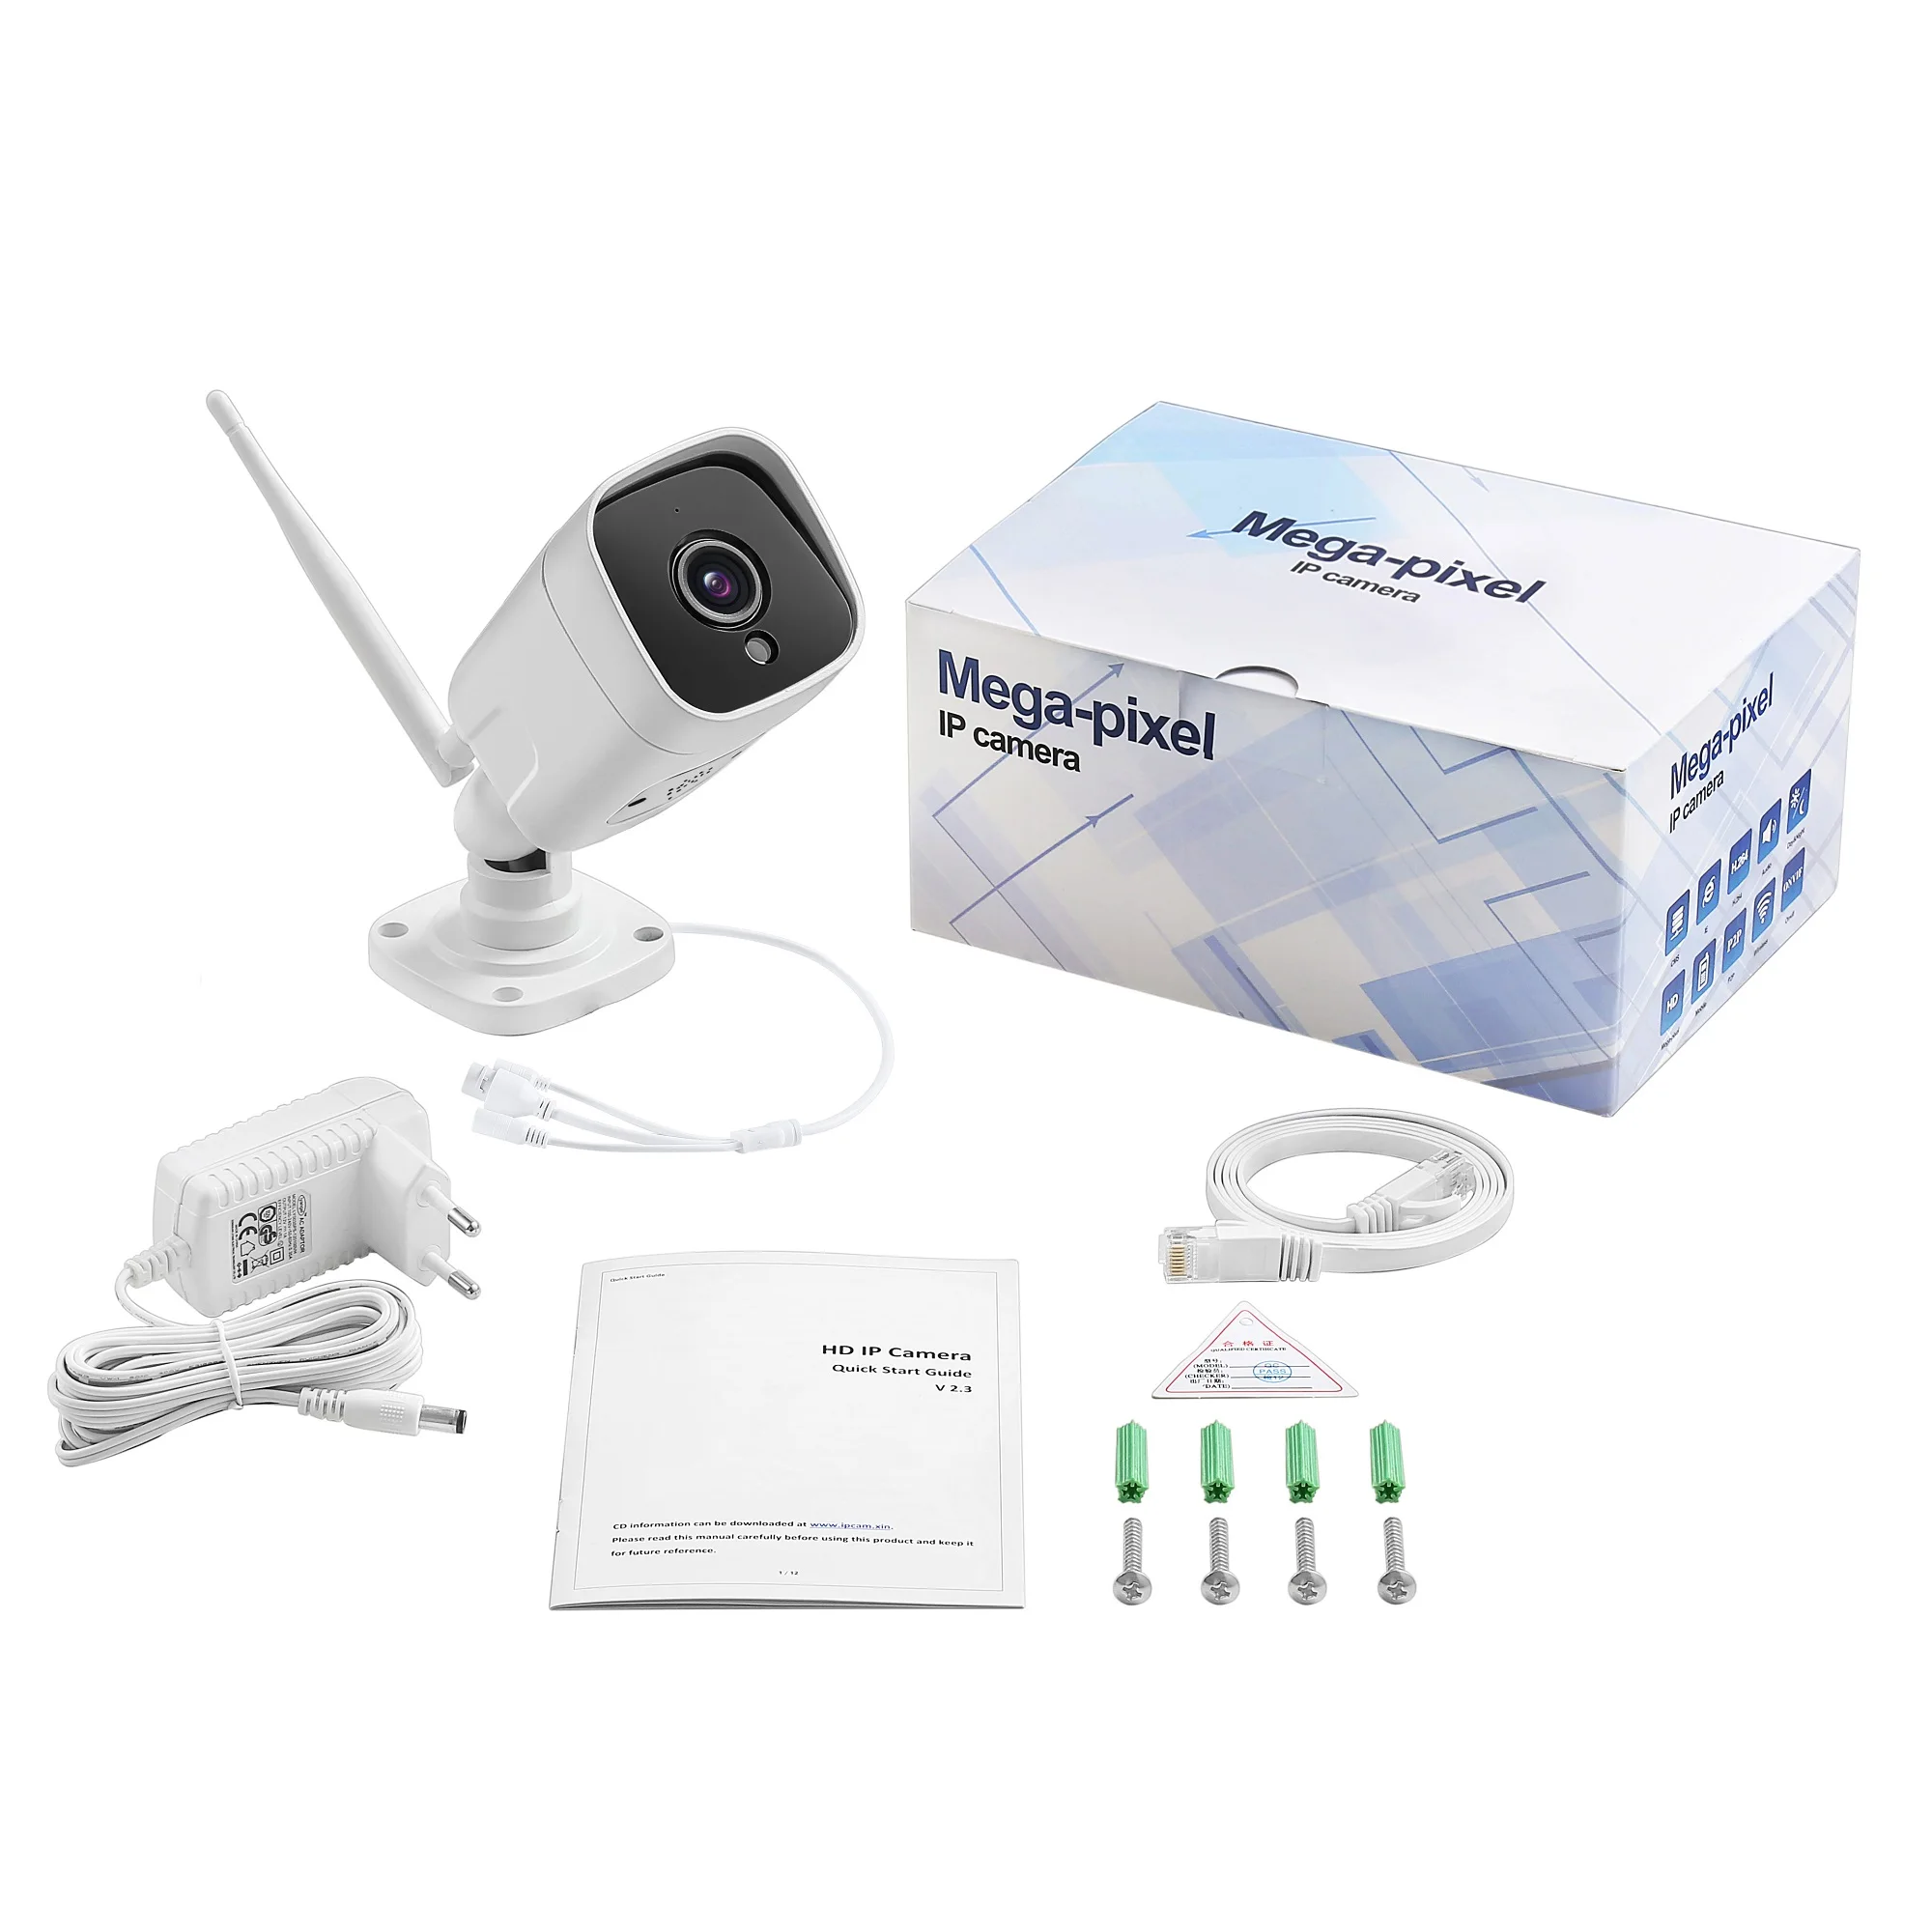 Bosesh-B19W IP cameras Safe and effective monitoring equipment CCTV camera Wireless card voice intercom waterproof   Support P2P